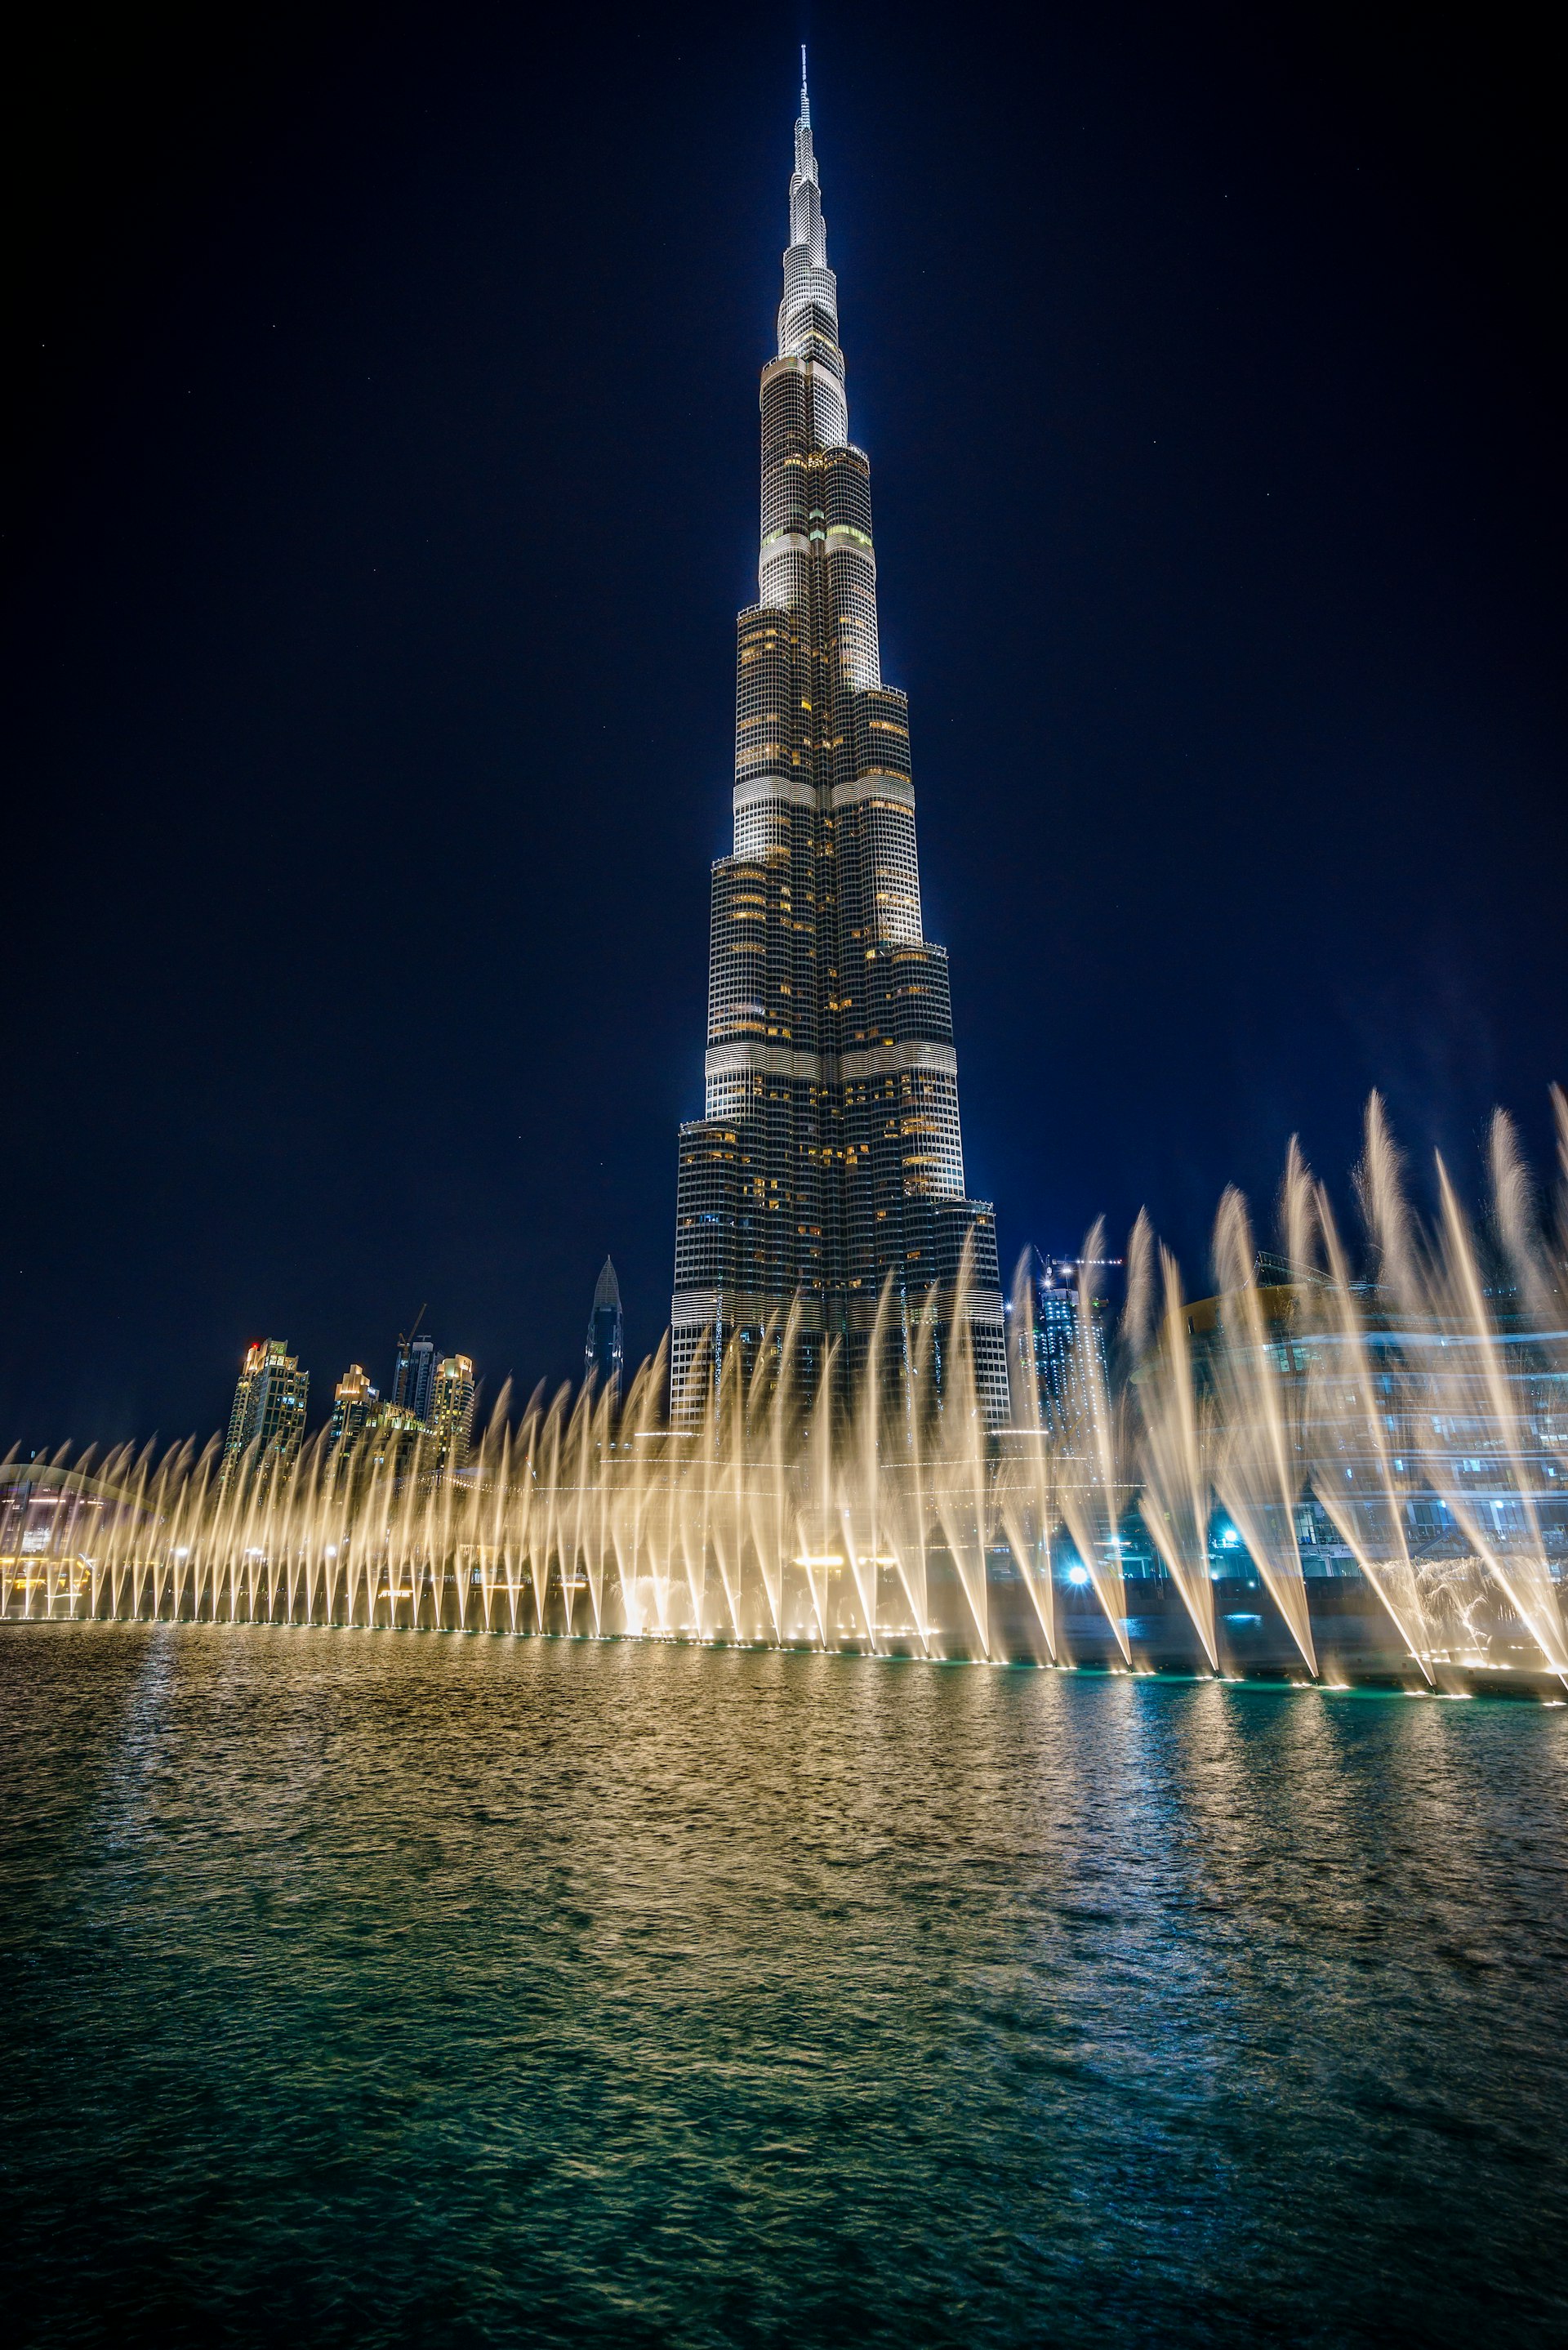 Dubai Fountain outside the Burj Khalifa